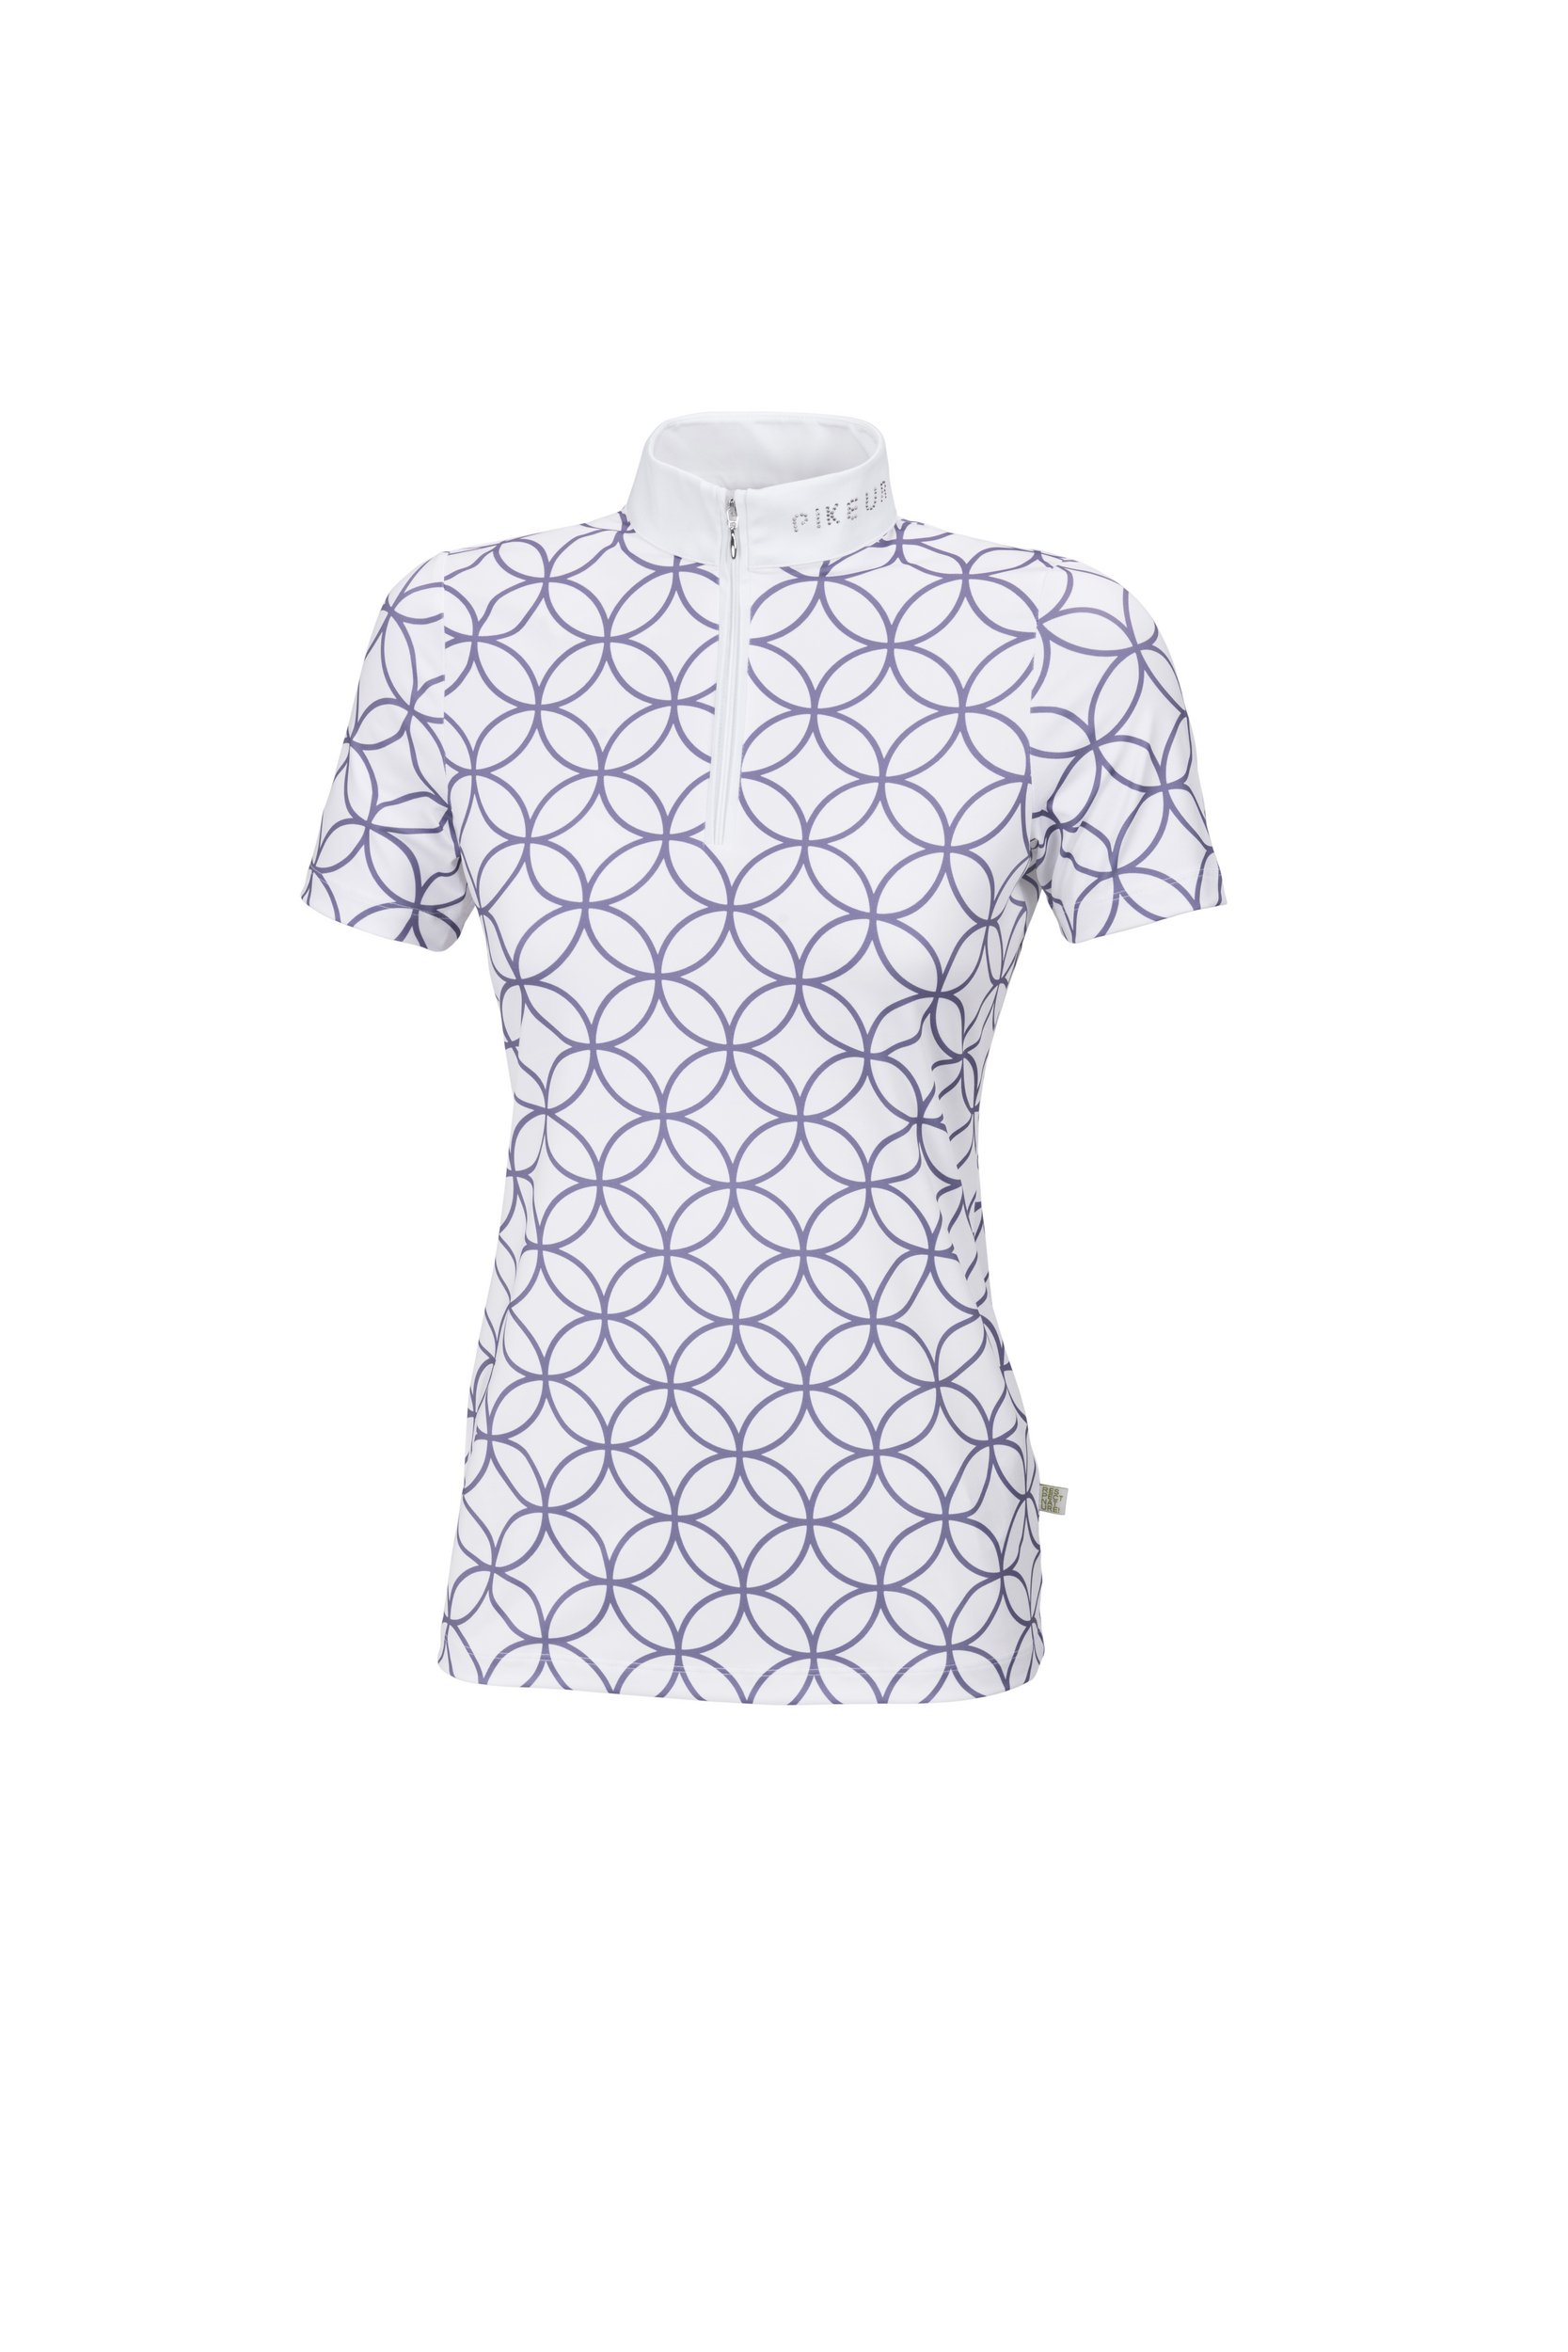 Damen-Turniershirt Marou, Sportswear 22, weiss/silberviolett